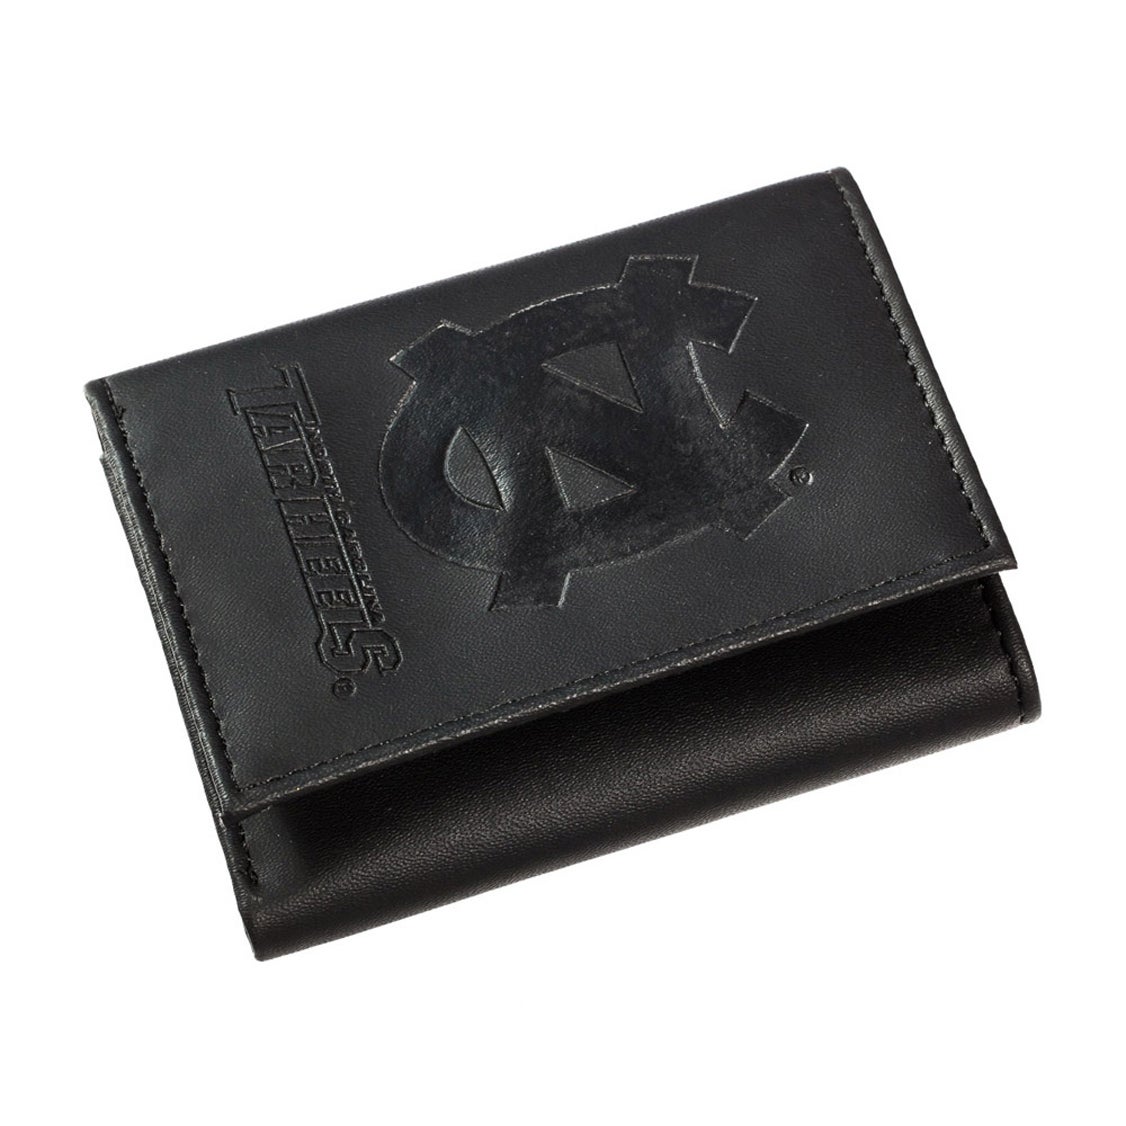 University of North Carolina Tri-Fold Leather Wallet